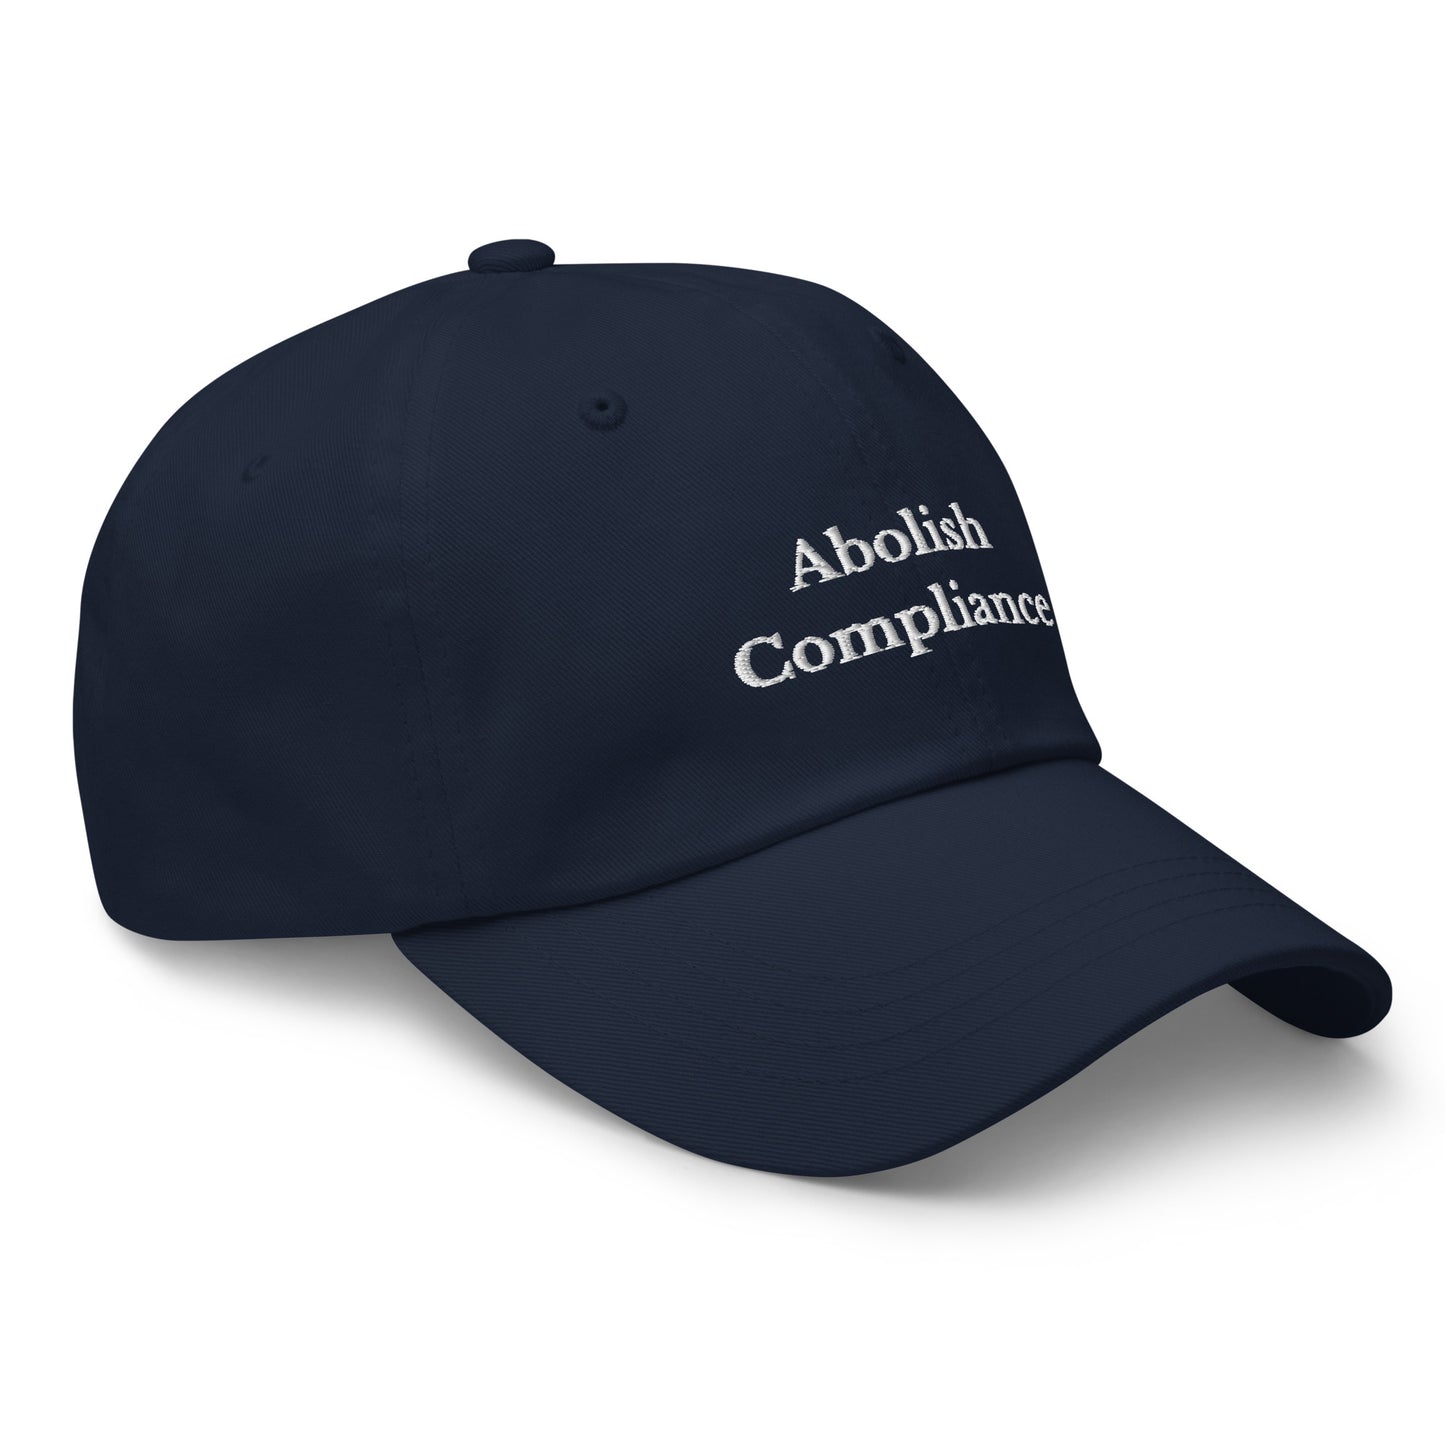 Abolish Compliance Cap